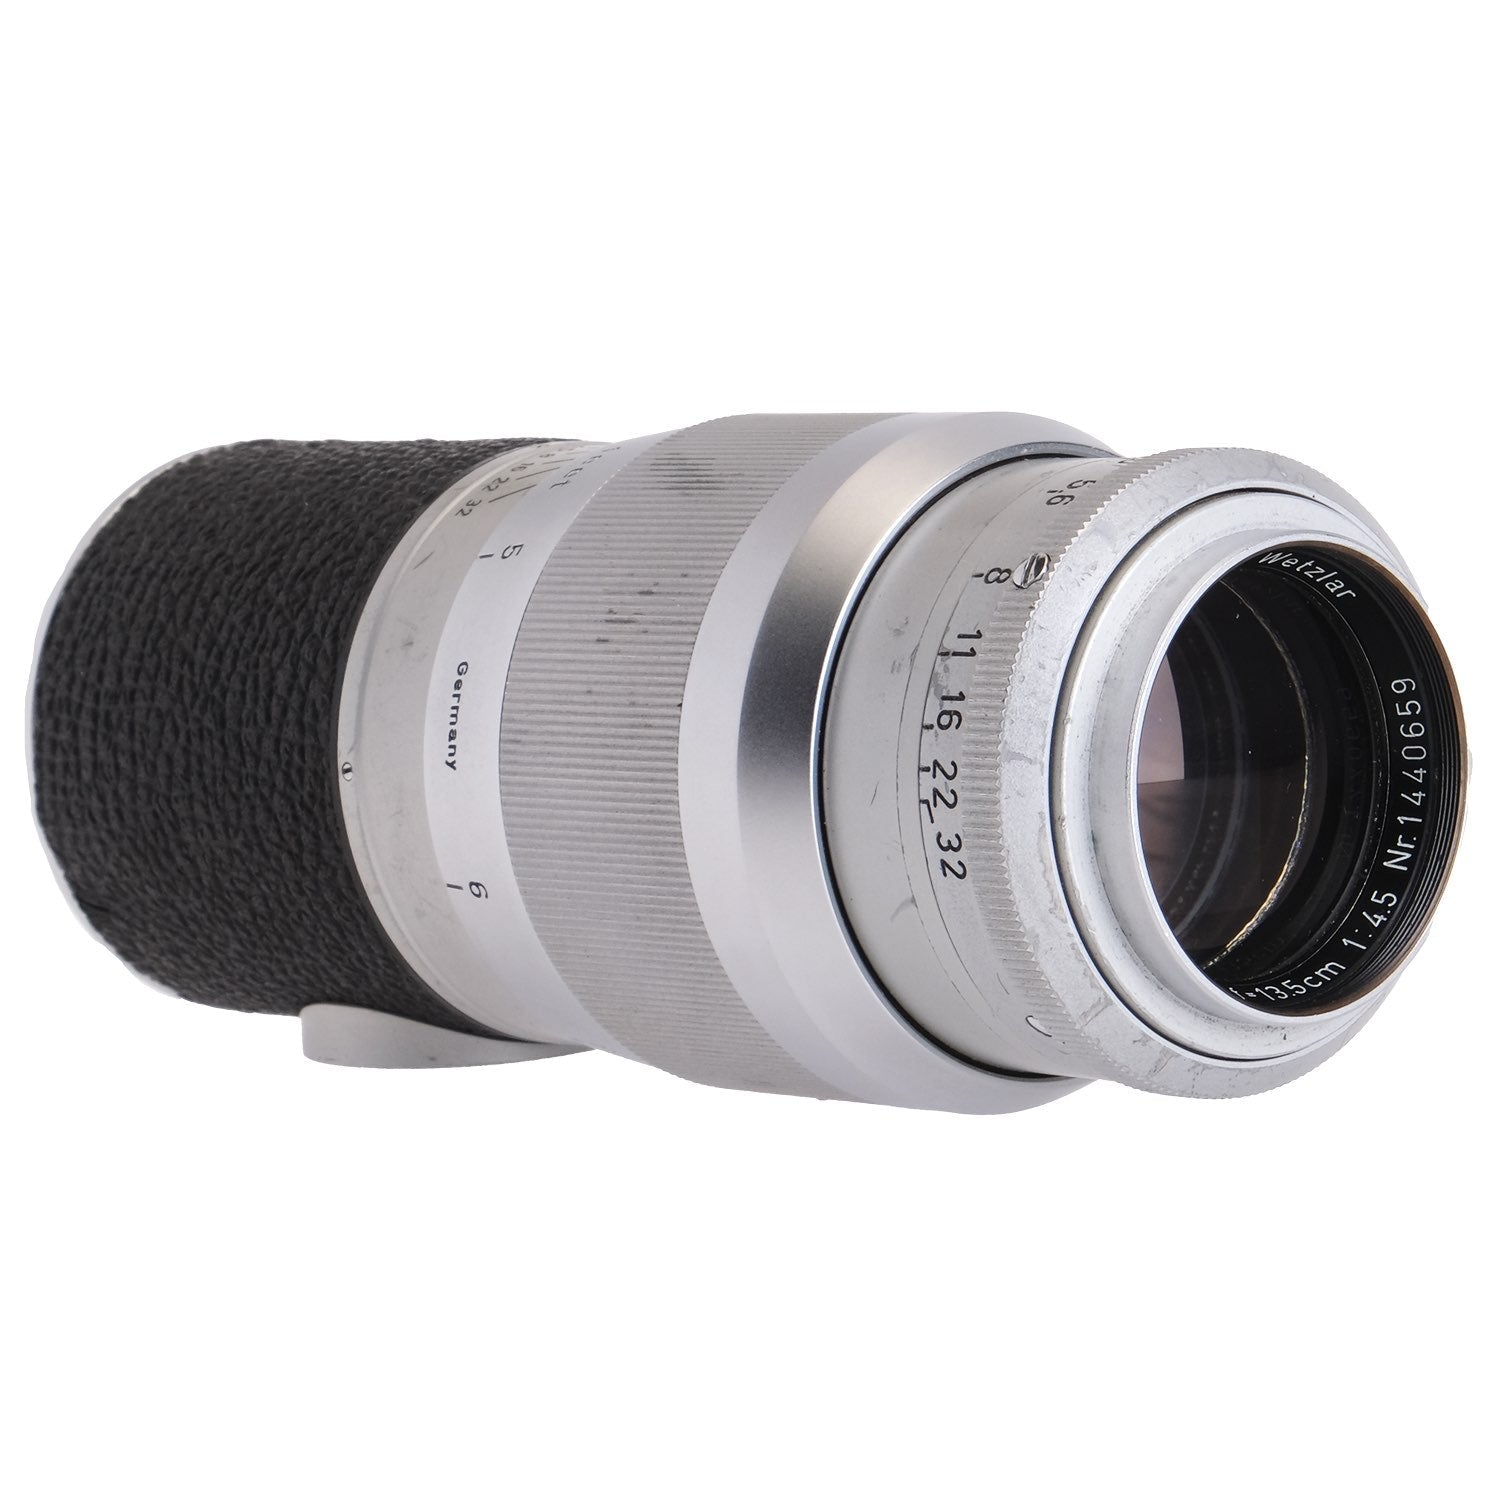 Leica 13.5cm f4.5 1440659